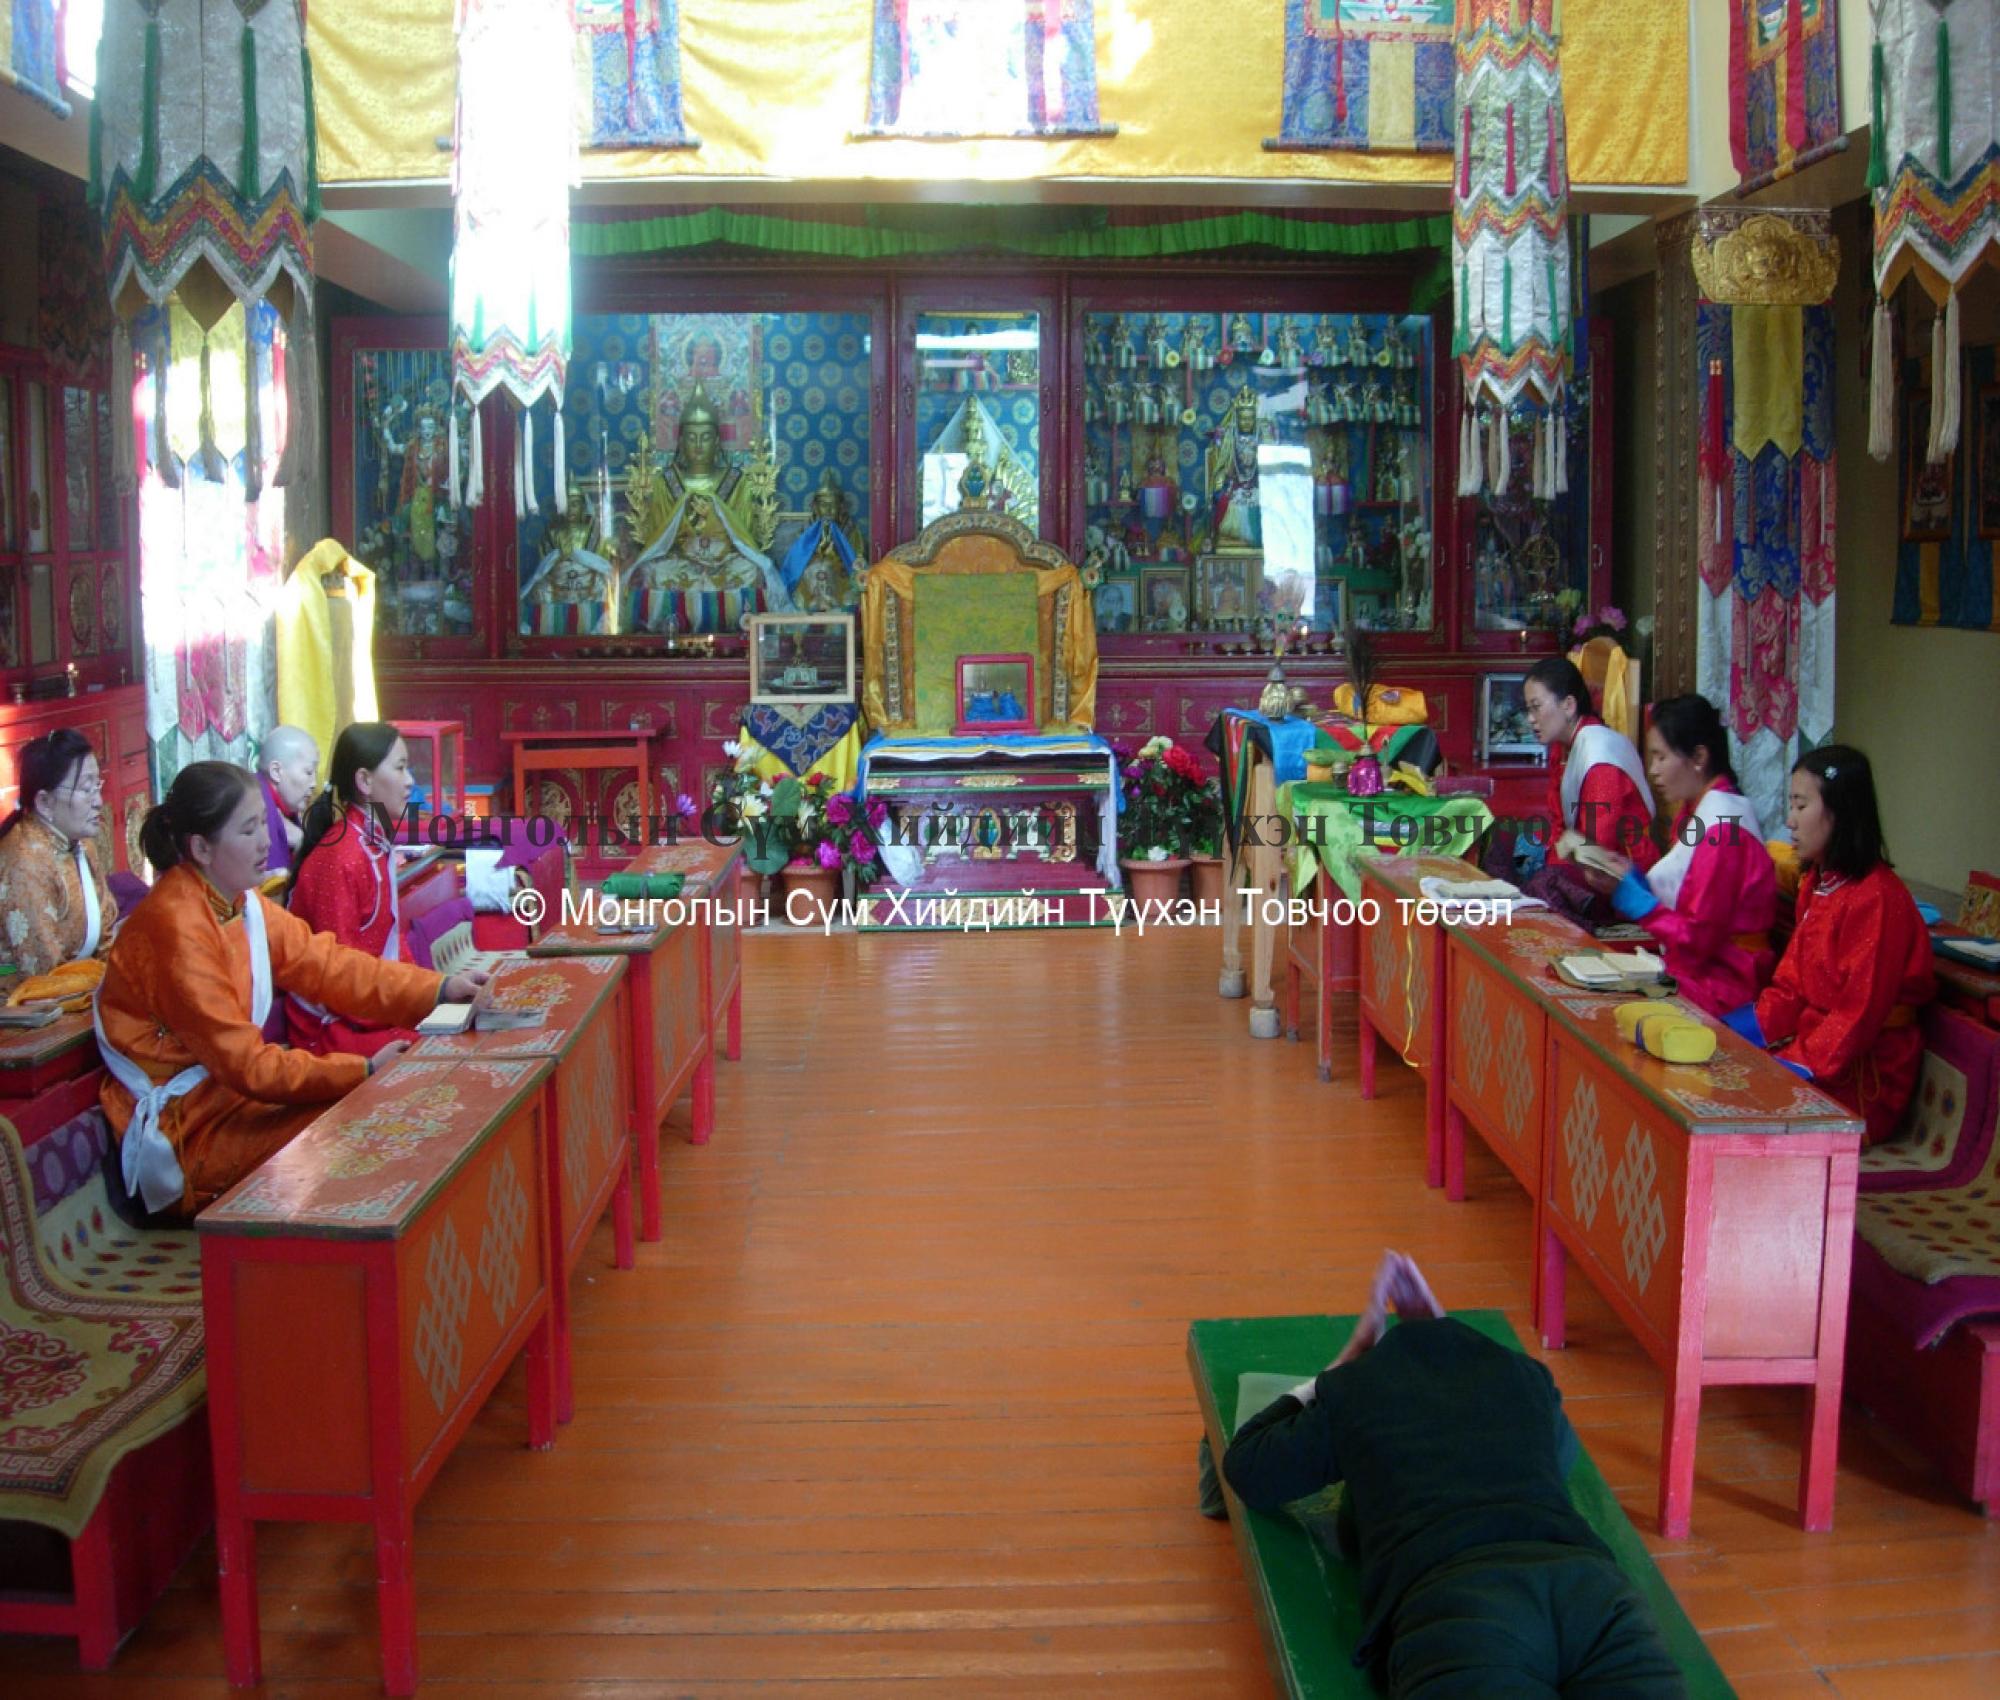 Inside the temple prayer room